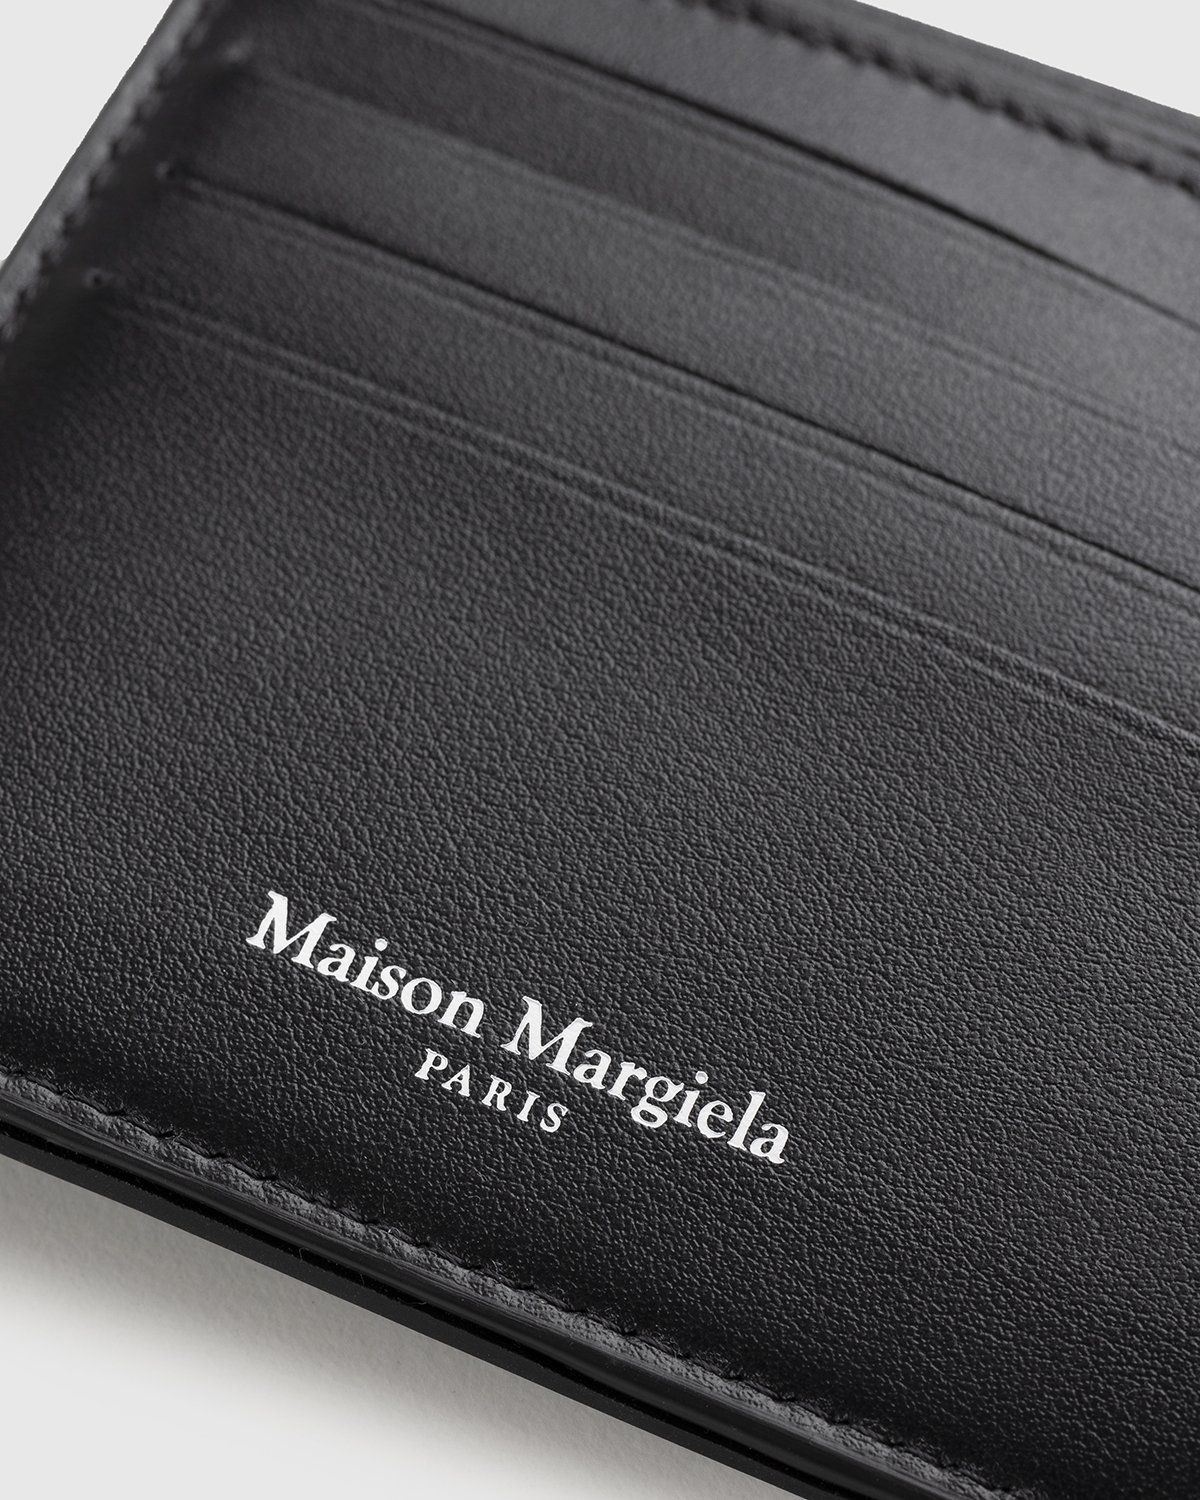 Maison Margiela – Bi-Fold Wallet Black - Image 5